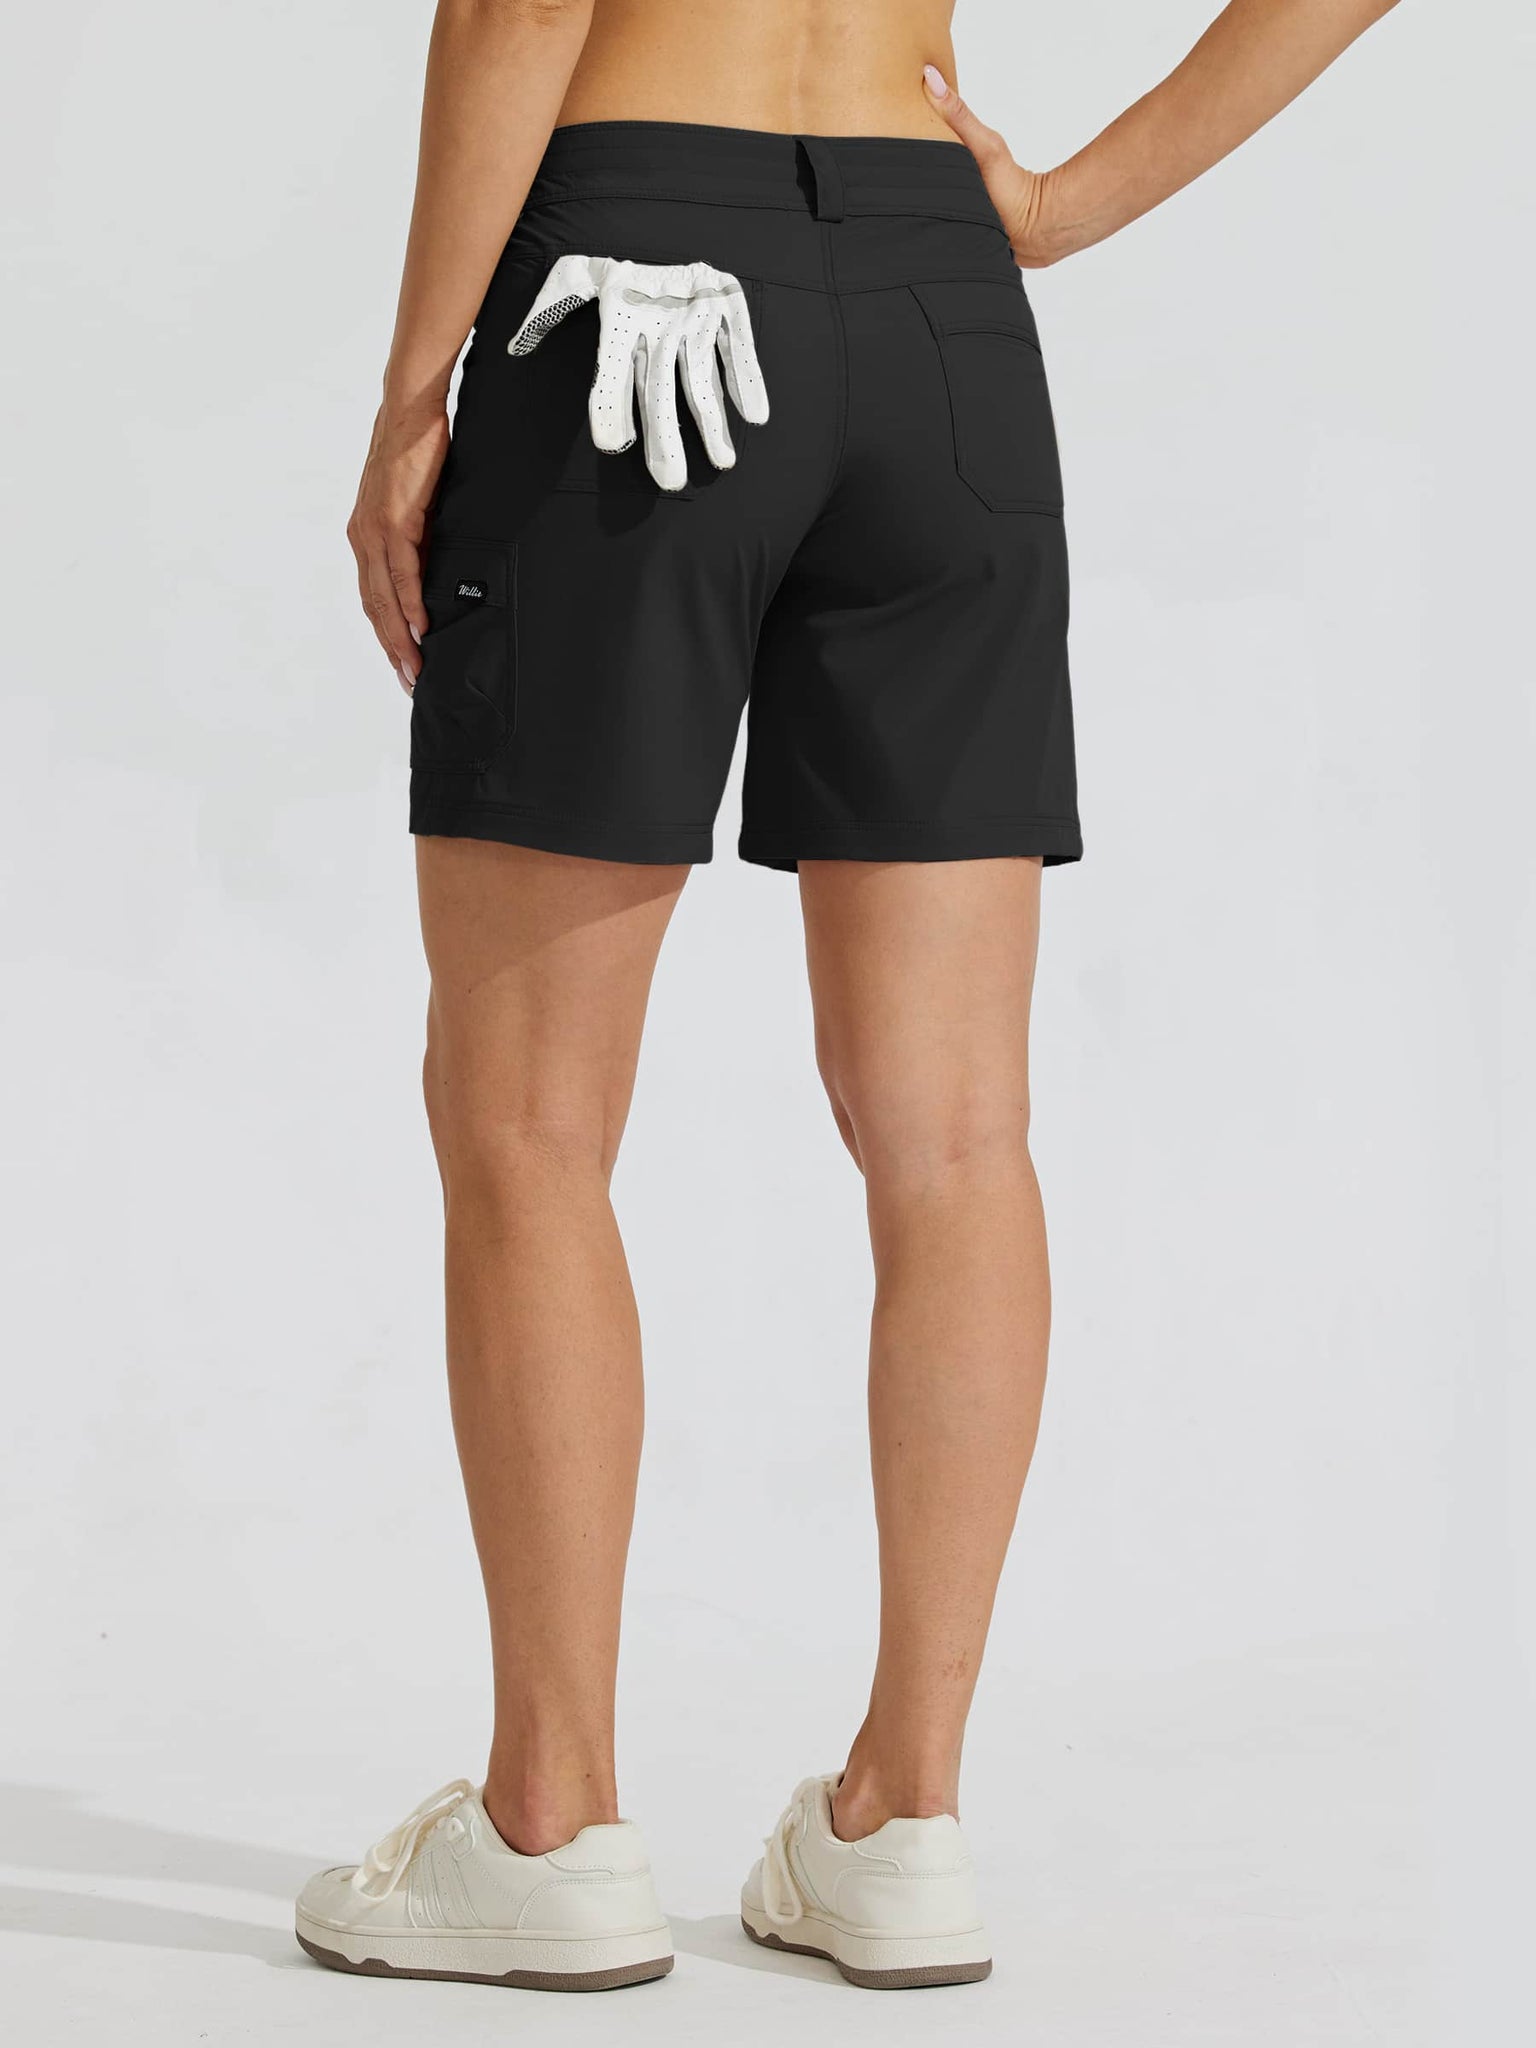 Women's Outdoor Pro Shorts Black_model1